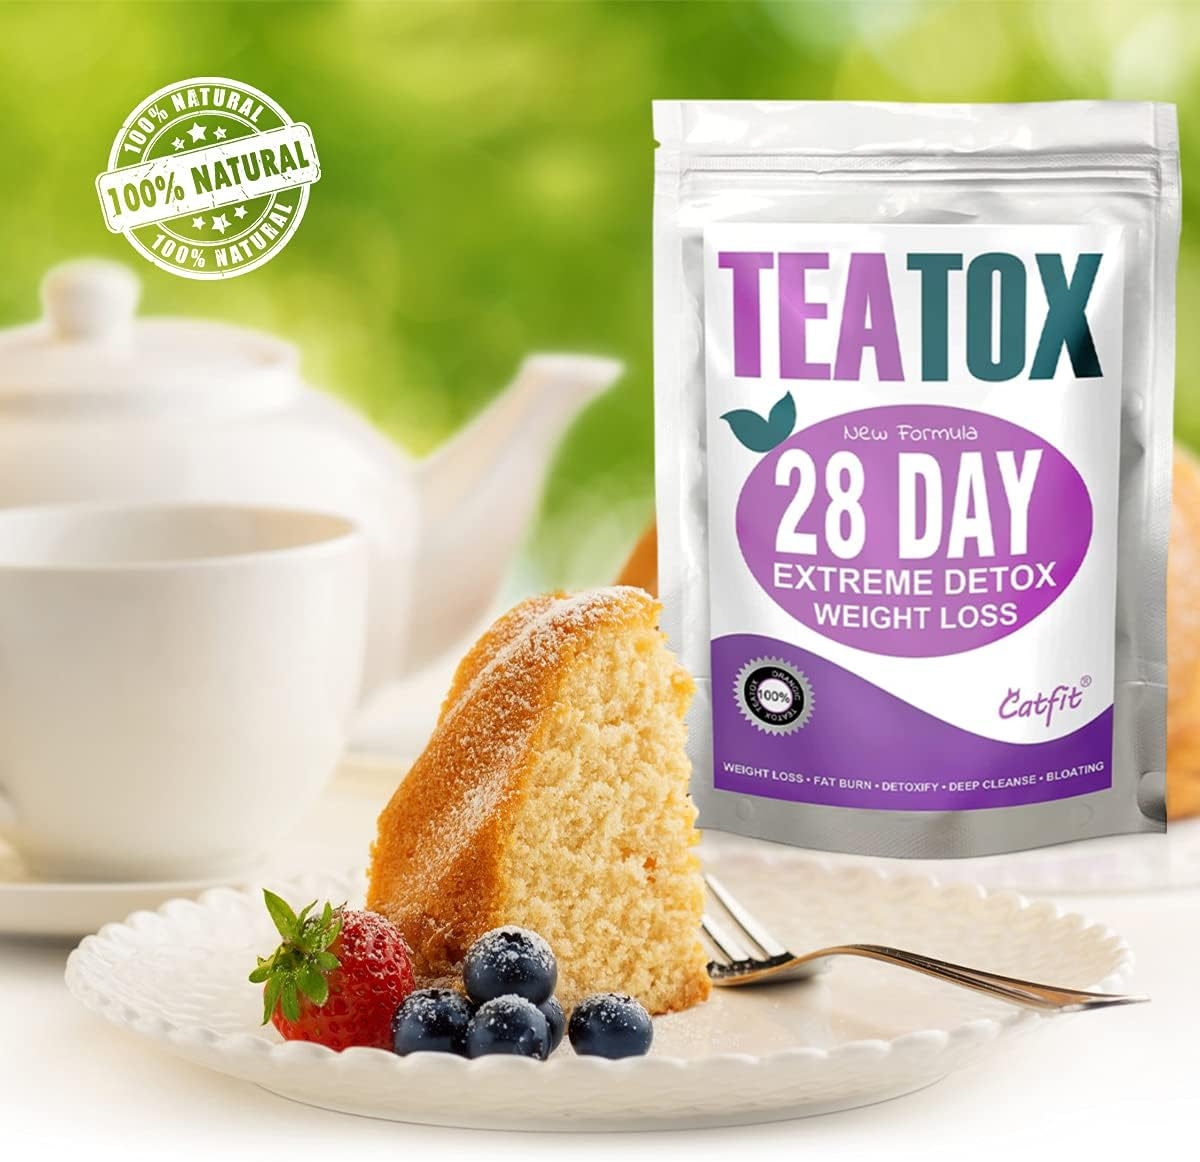 Catfit Detox Tea Herbal Tea Teatox , 28 Days Weight Loss Diet Tea for Cleanse